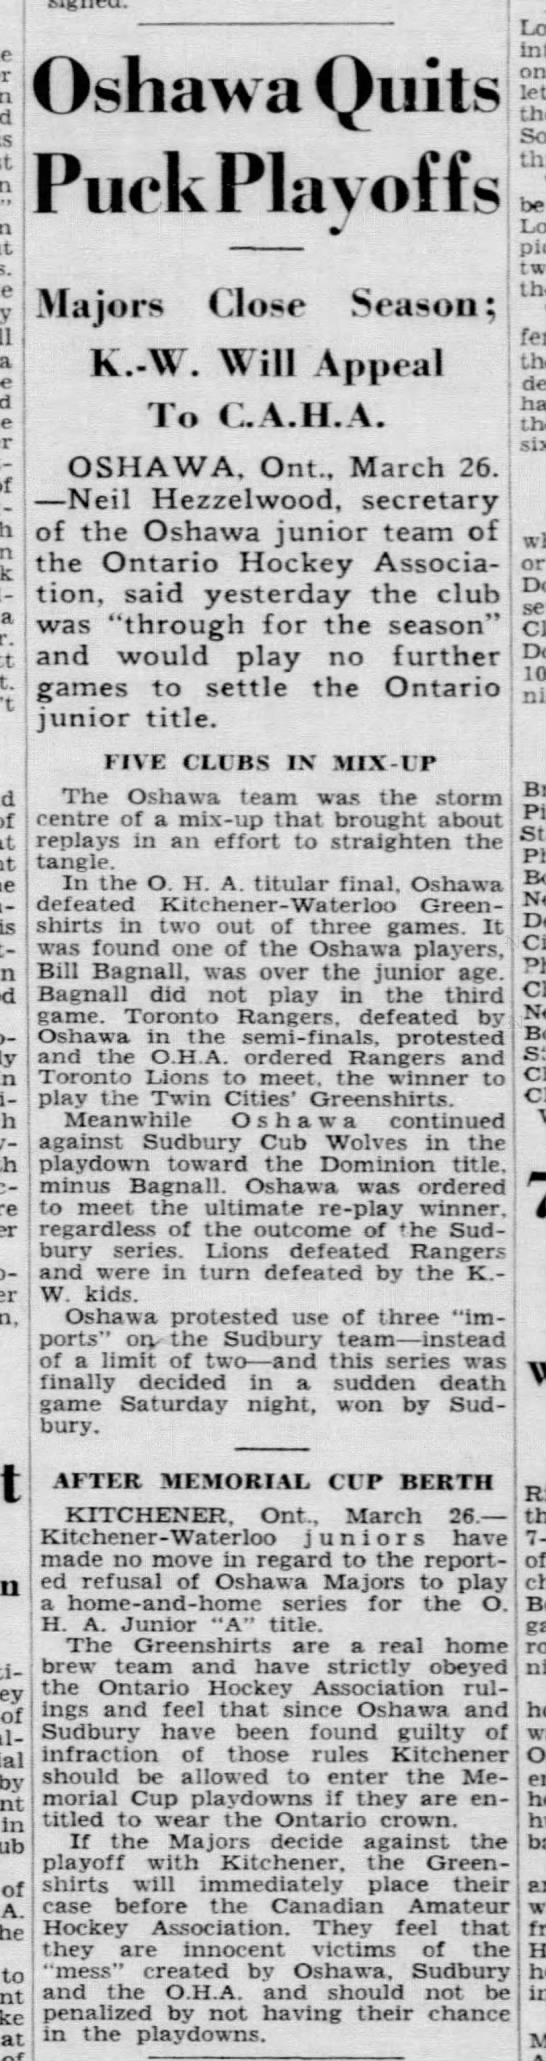 OHA playoffs 1935 - 